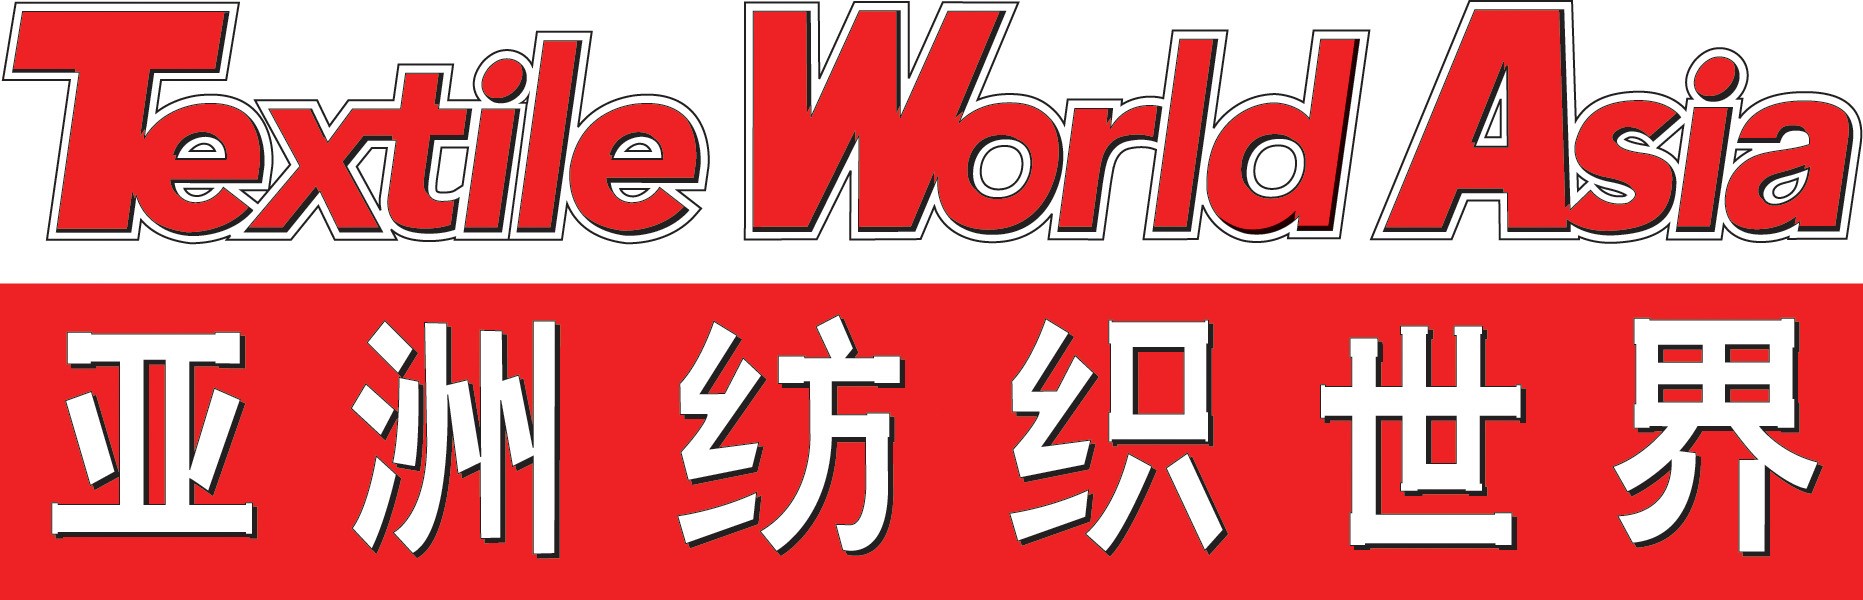 TWA_logo